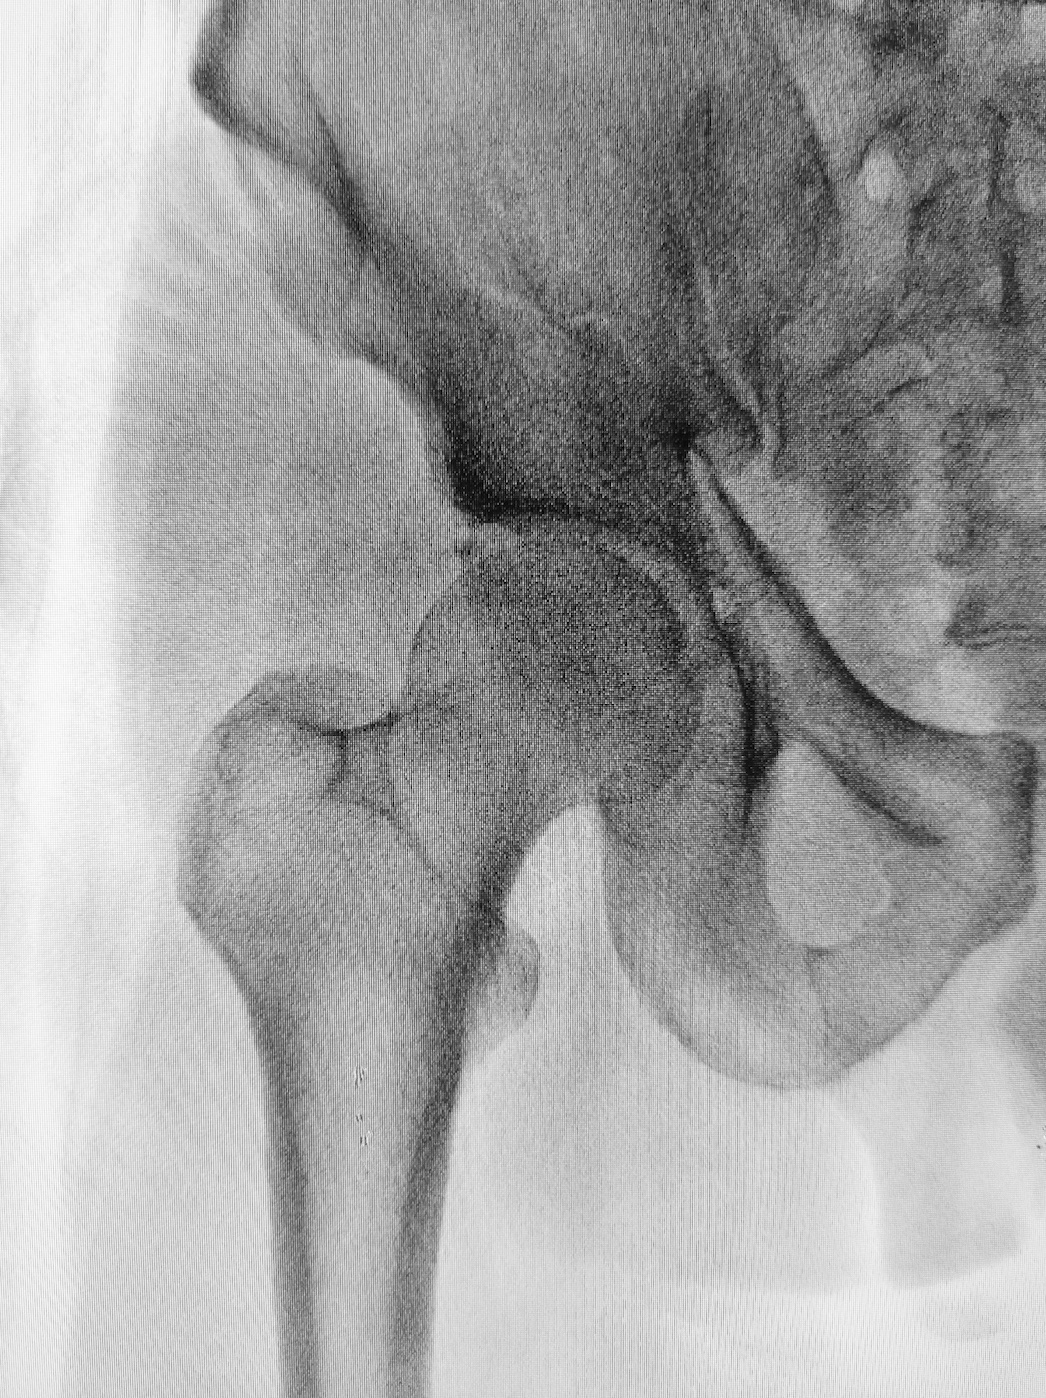 X-ray of hip fracture; image by Mehmet Turgut Kirkgoz, via Unsplash.com.